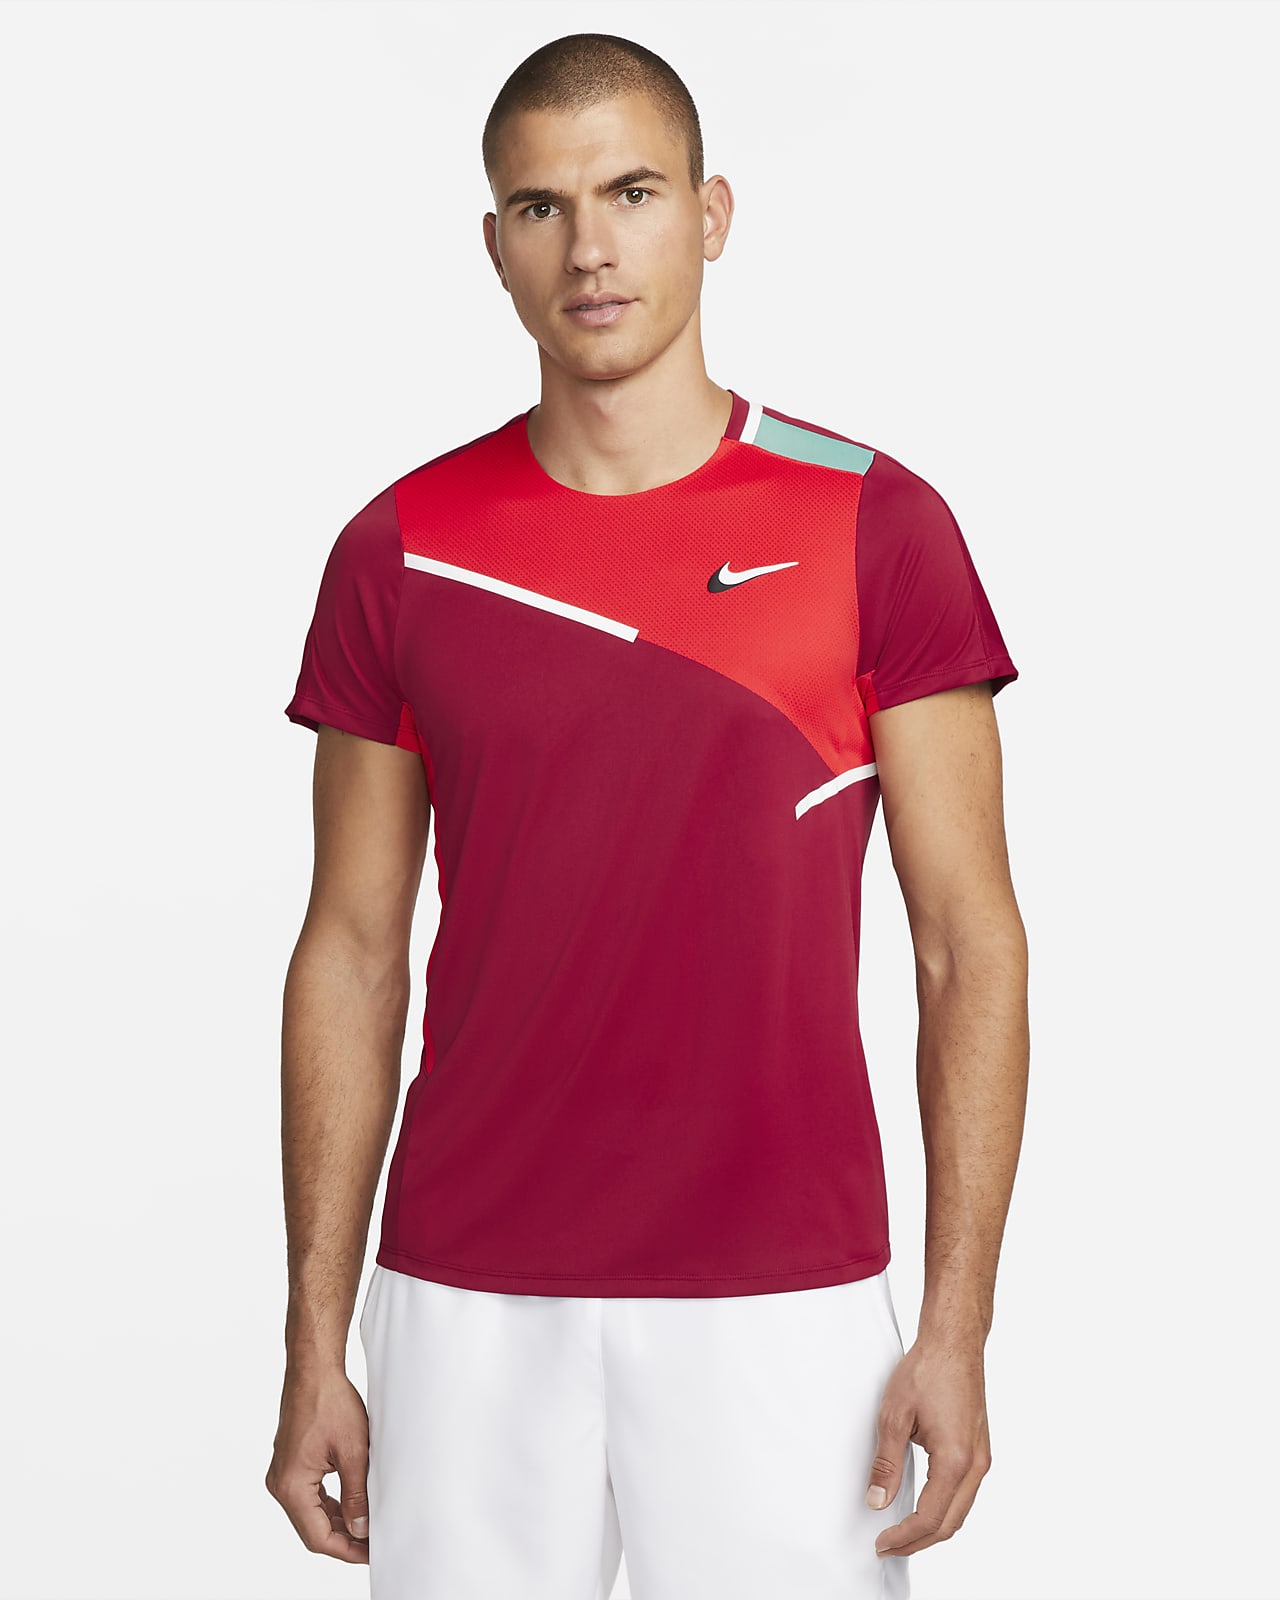 equipo deportivo de Golf tenis, camiseta transpirable para hombres 